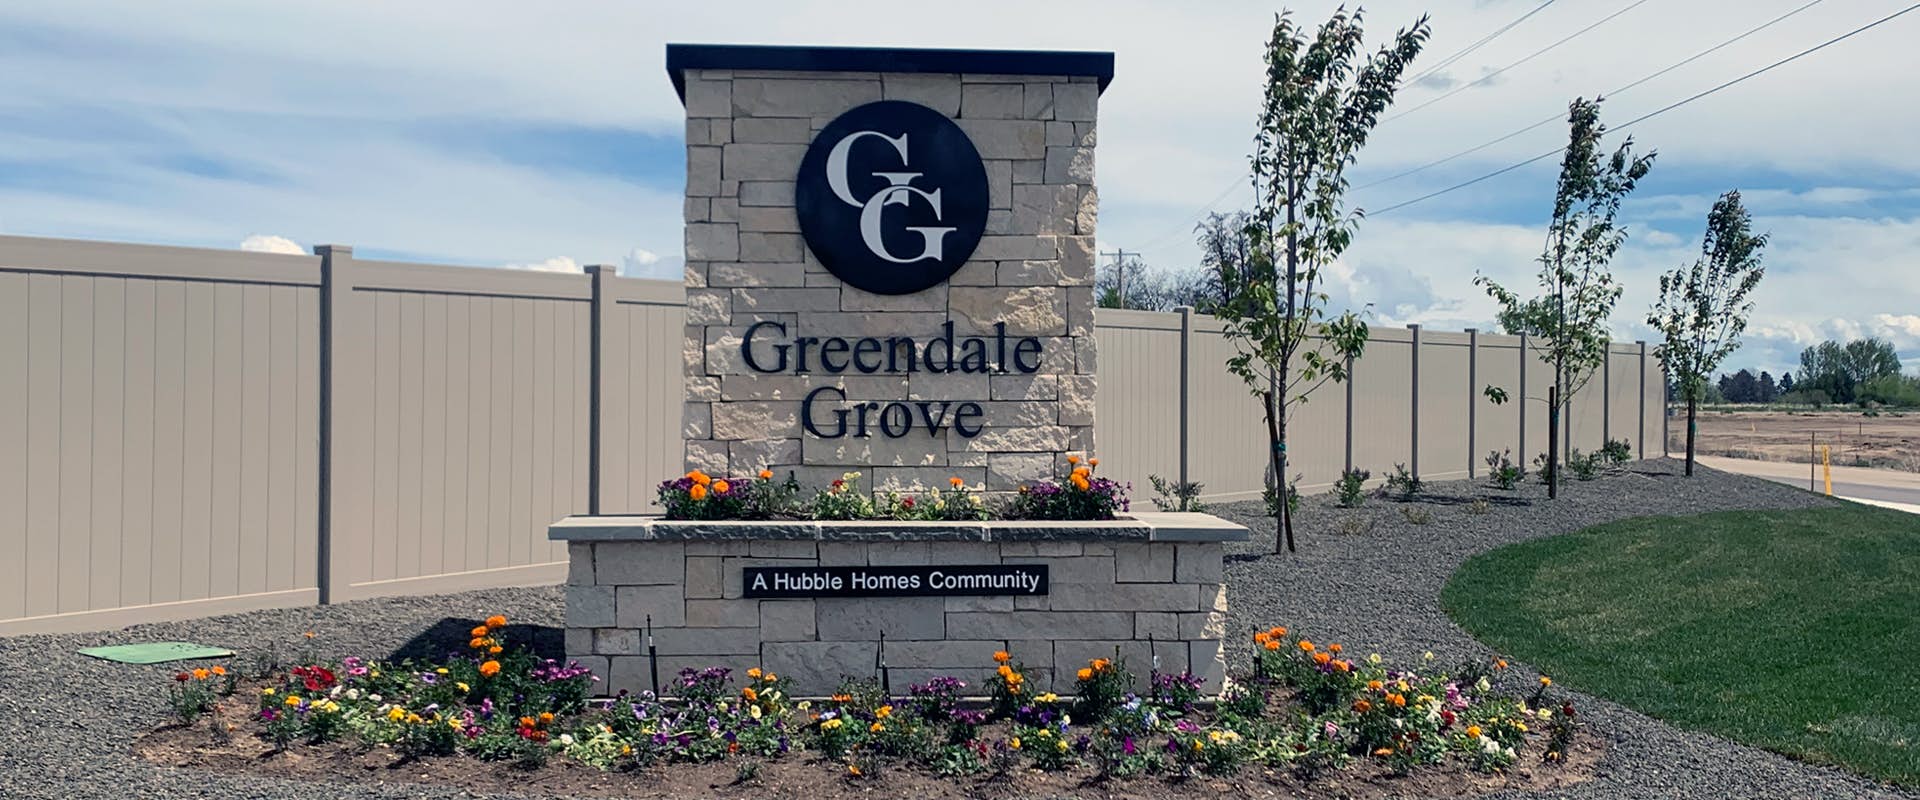 Greendale Grove Hubble Homes New Homes Boise1.jpg